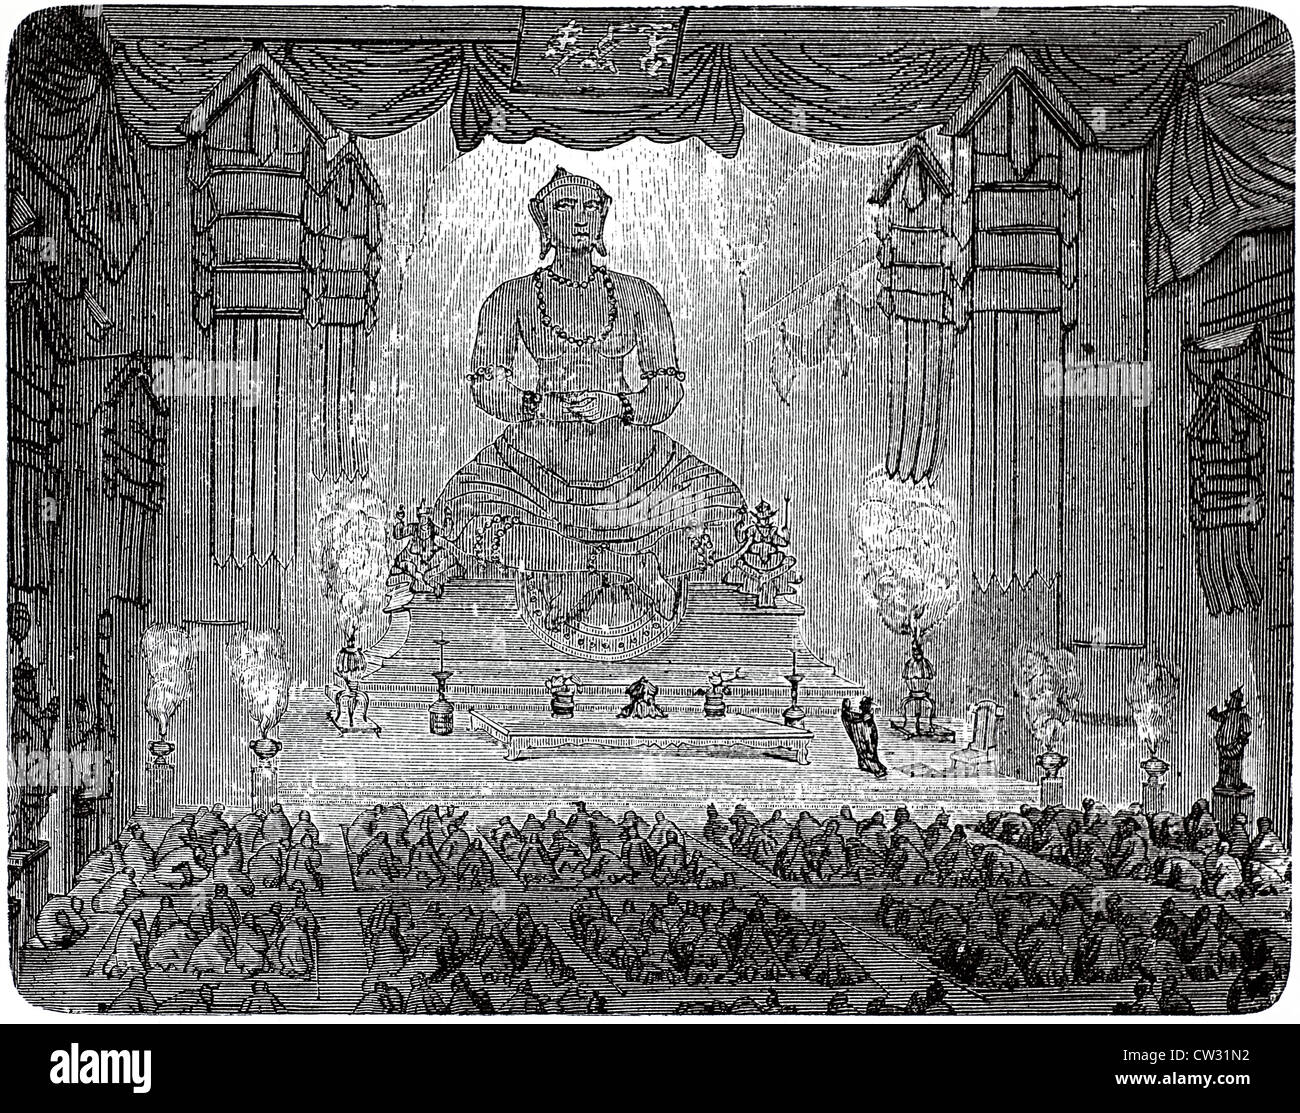 Veneration of the Buddha Stock Photo